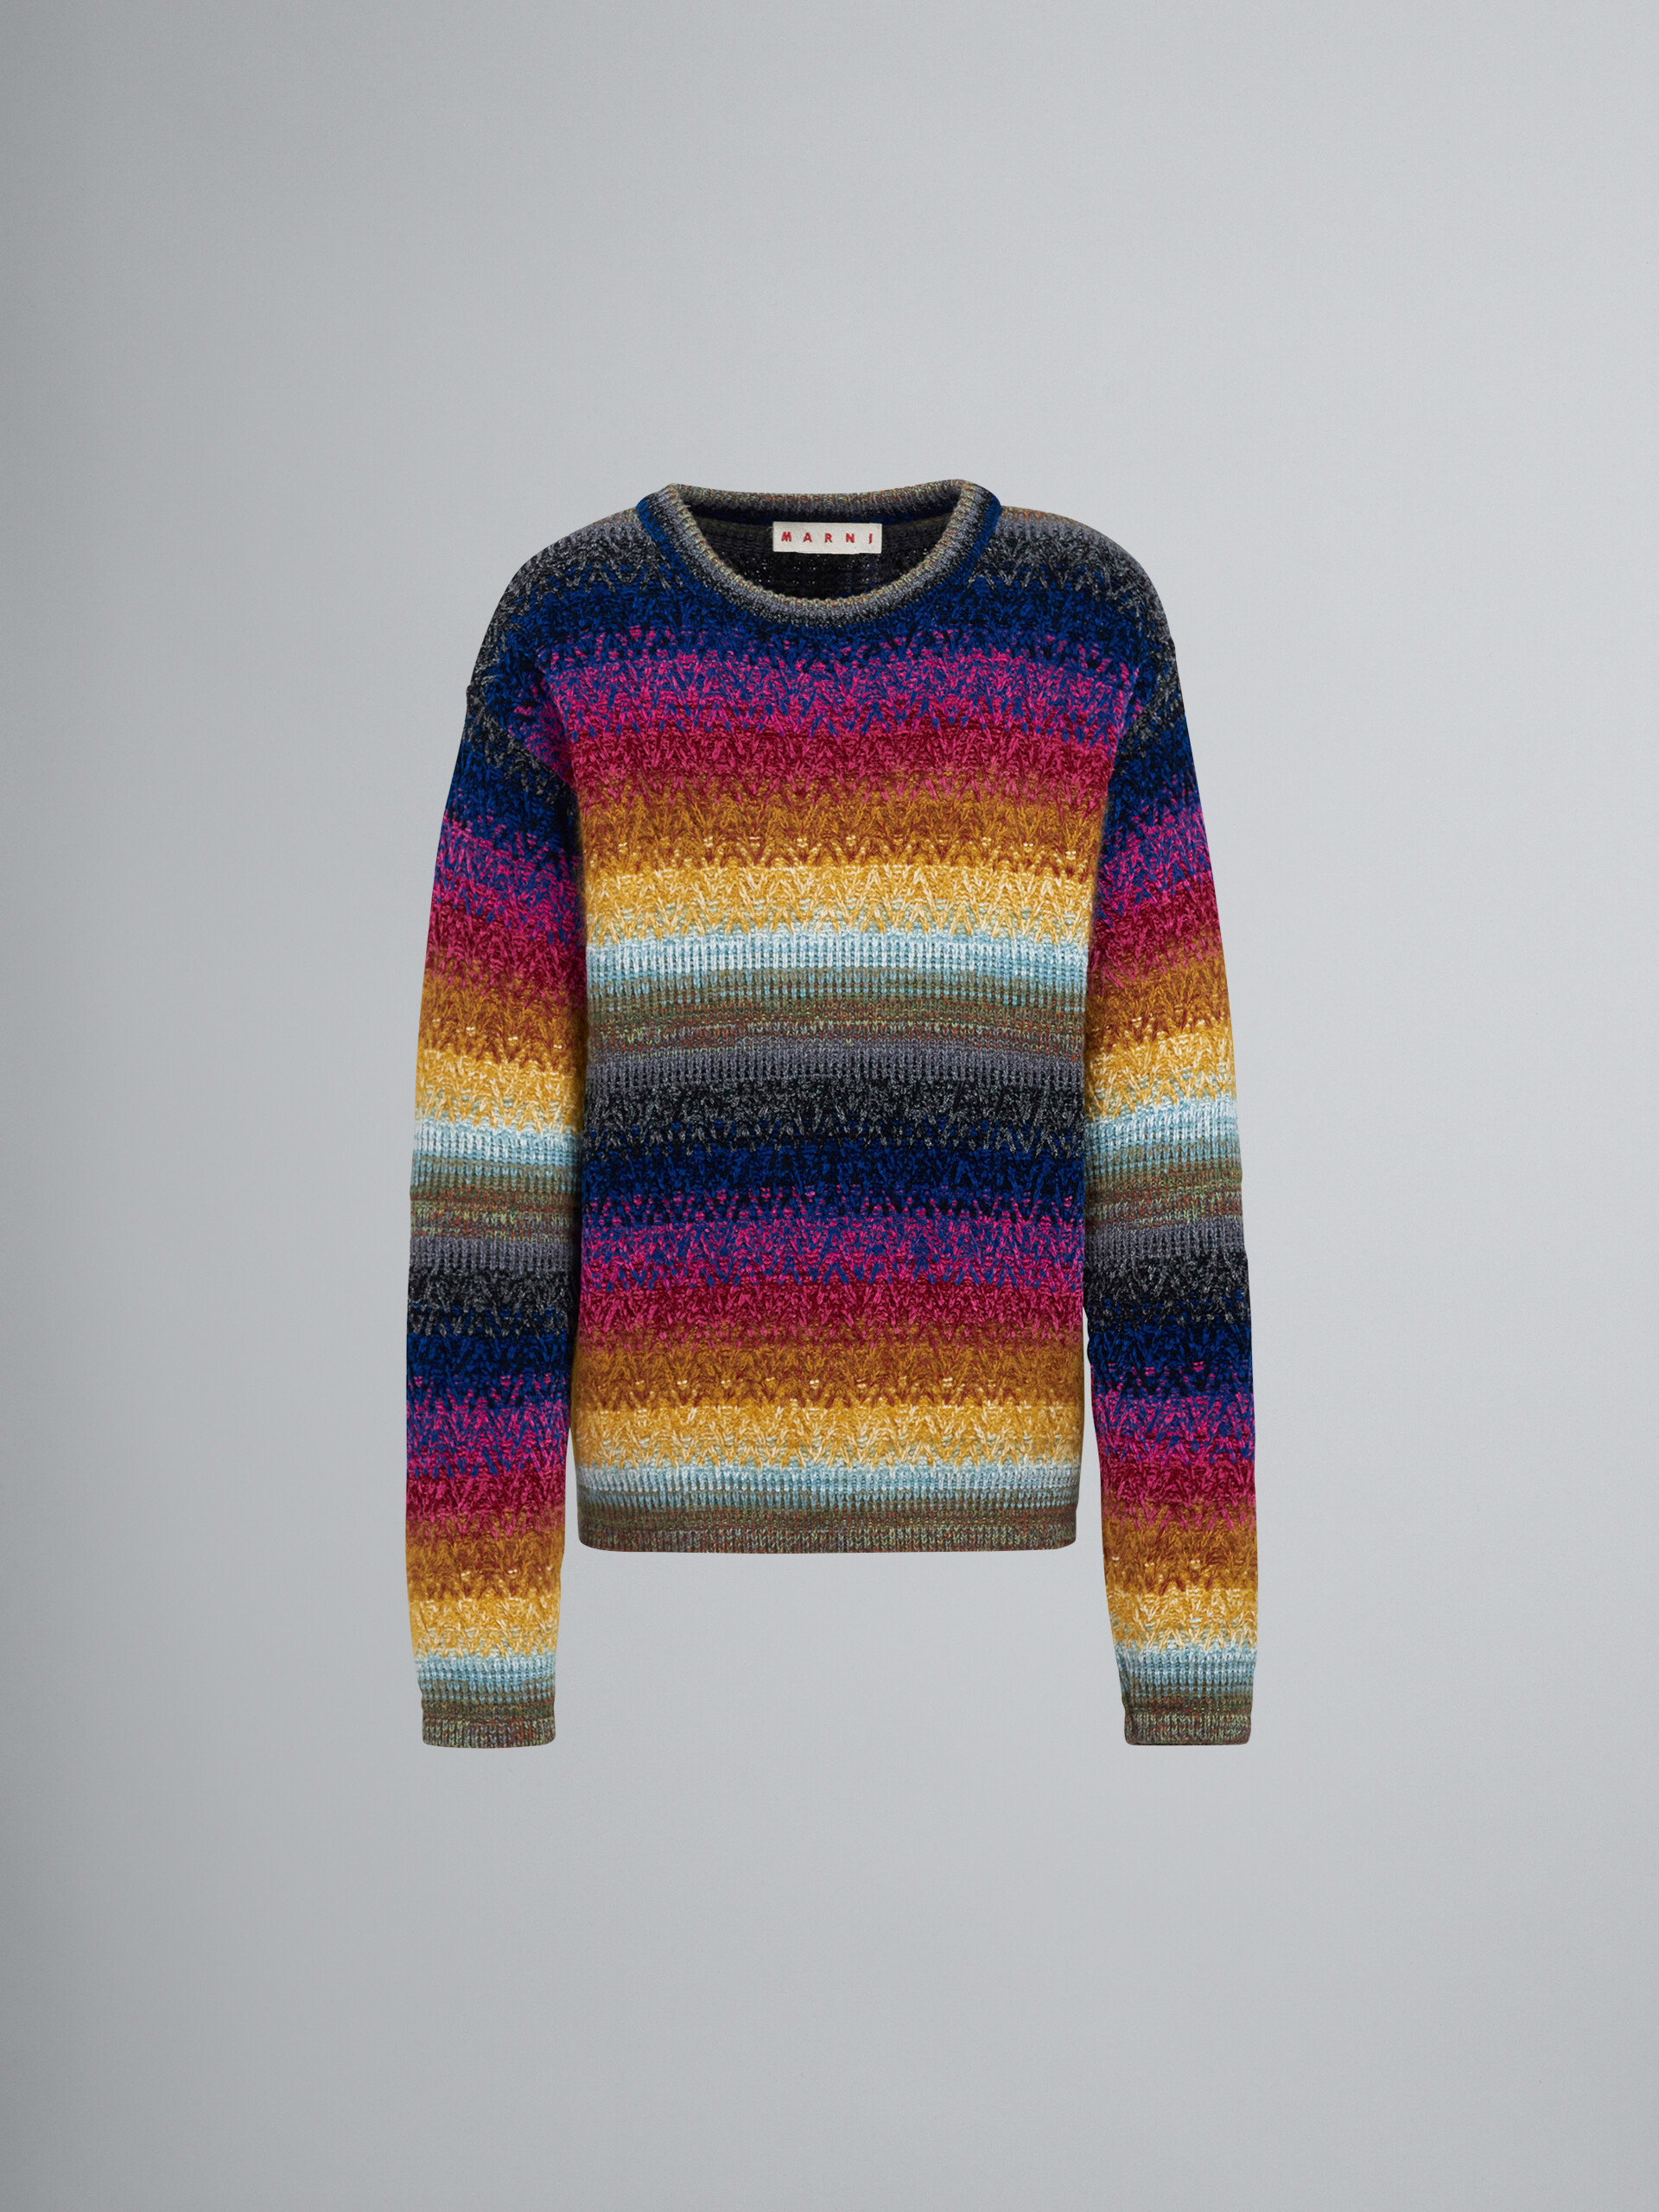 Viscose wool crewneck sweater - Pullovers - Image 1